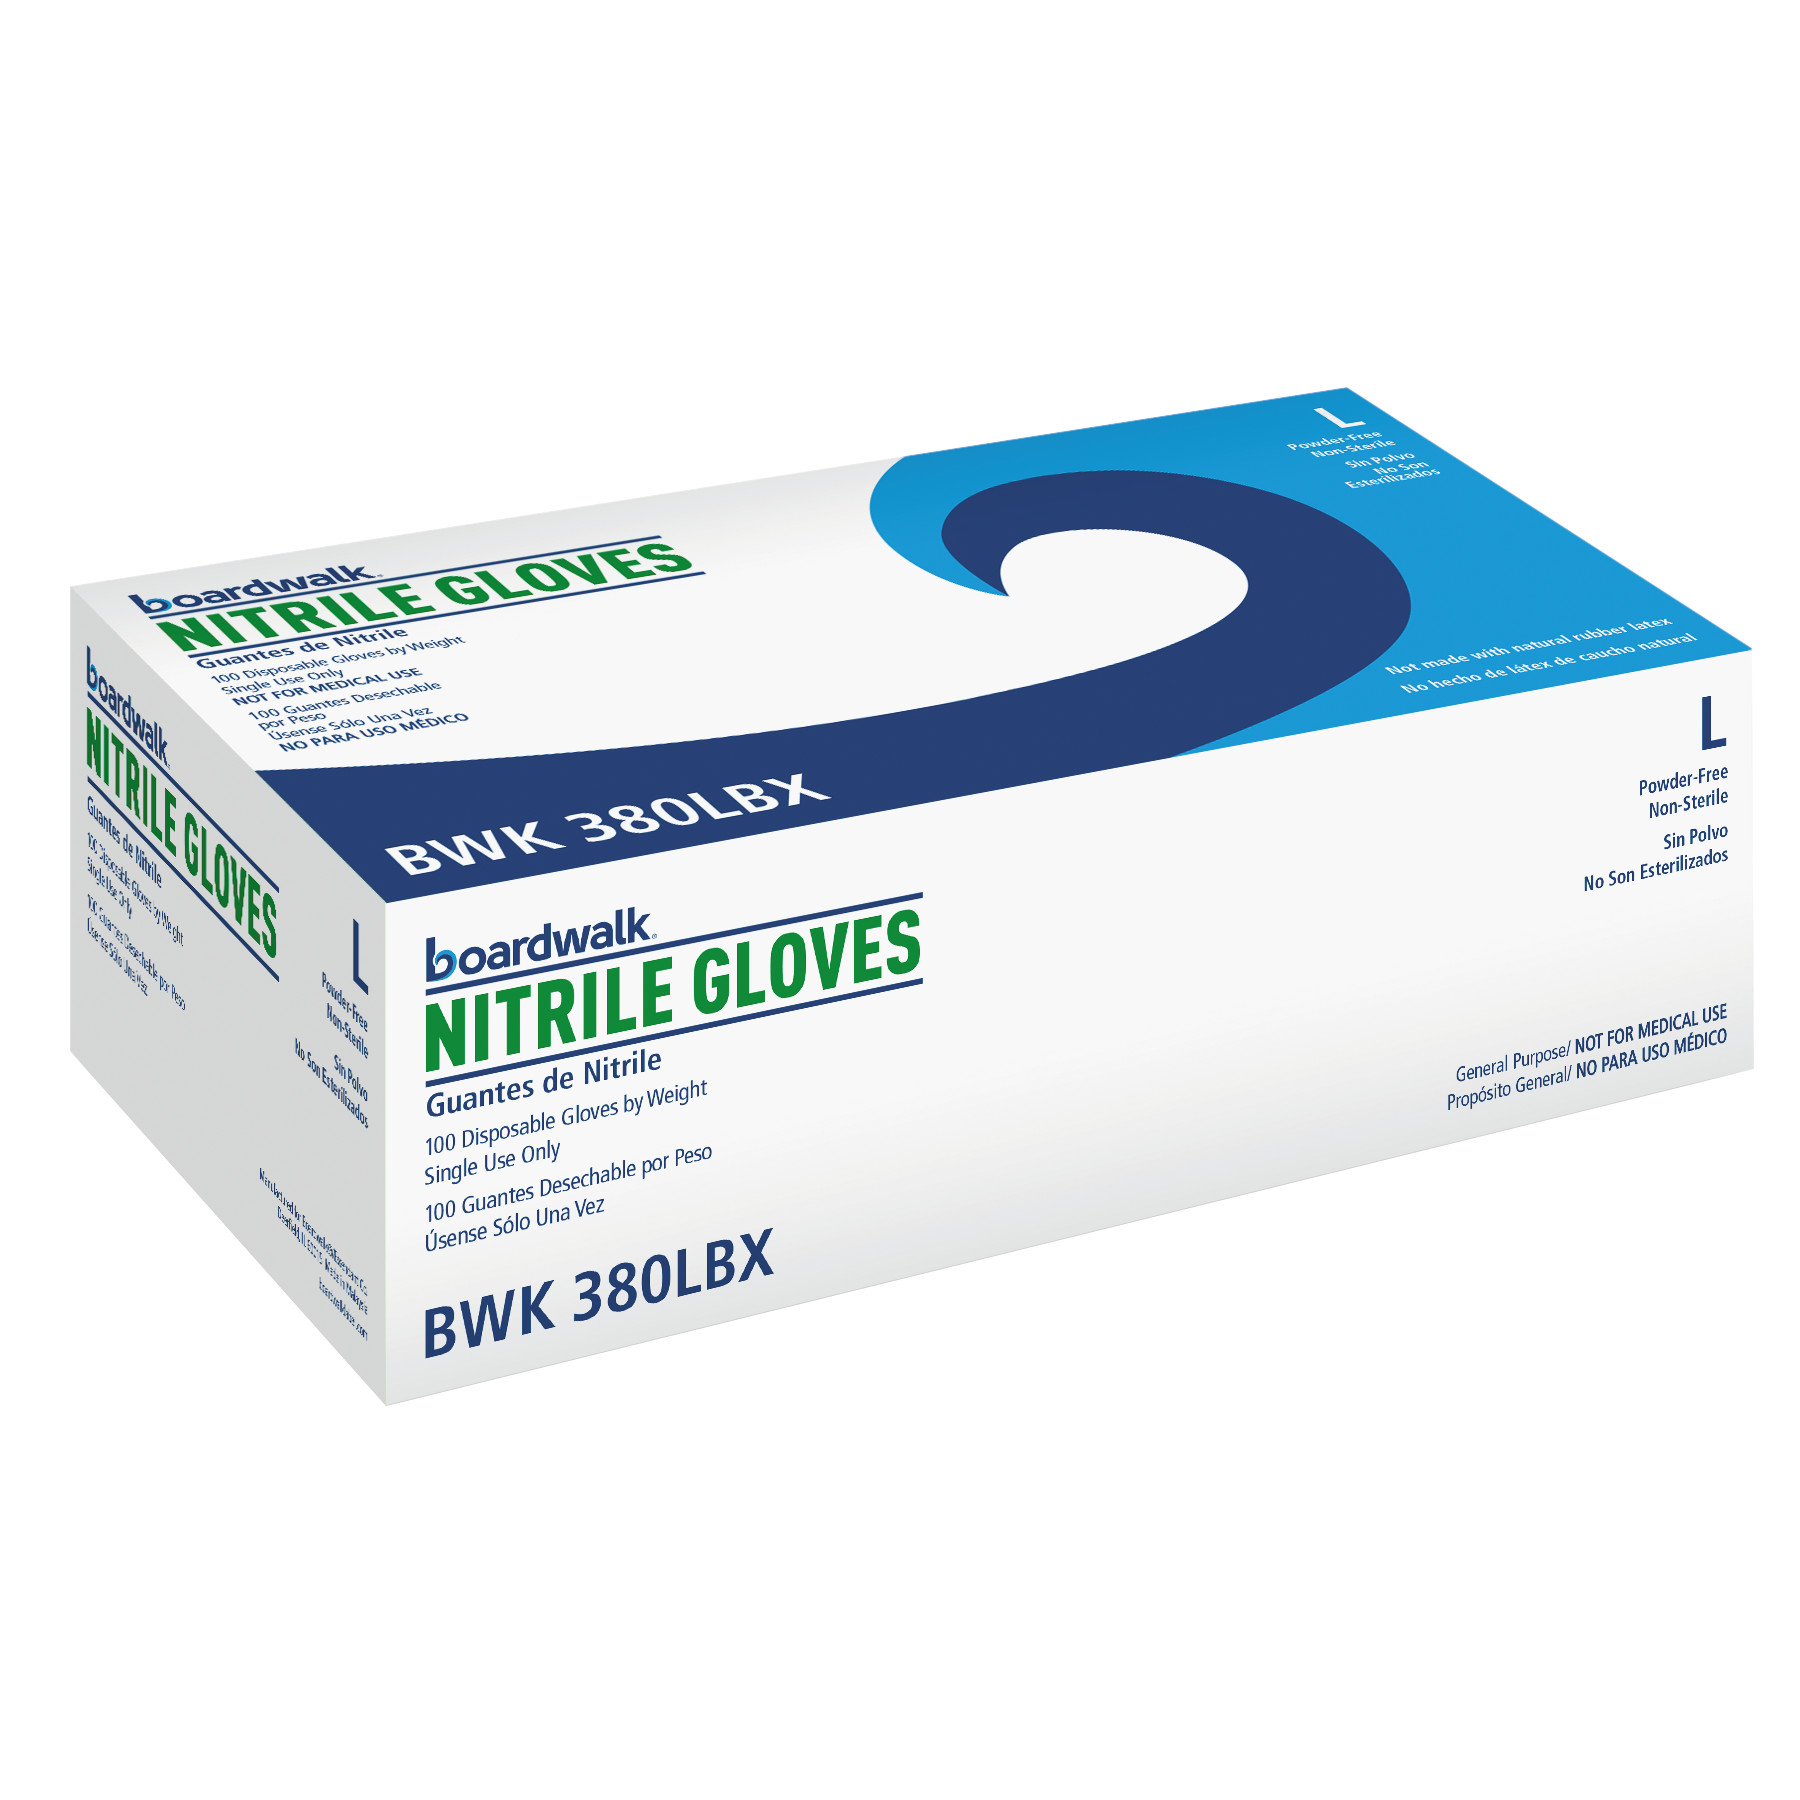 Disposable General-Purpose Nitrile Gloves, Large, Blue, 4 mil, 1000/Carton